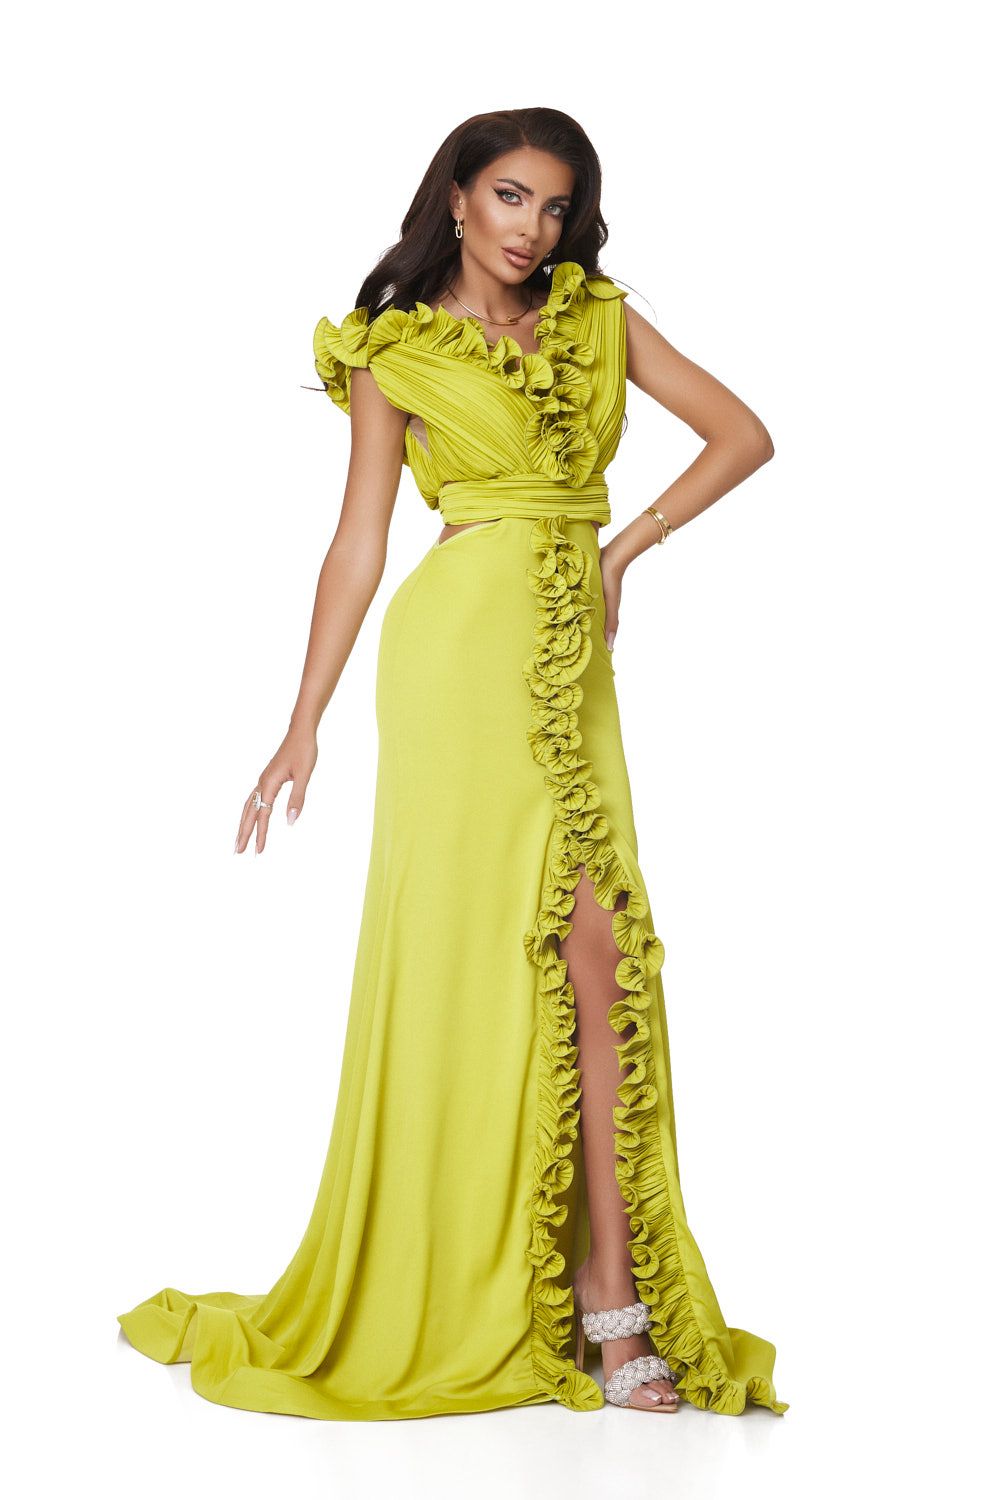 Long lime green dress for women by Zapissa Bogas